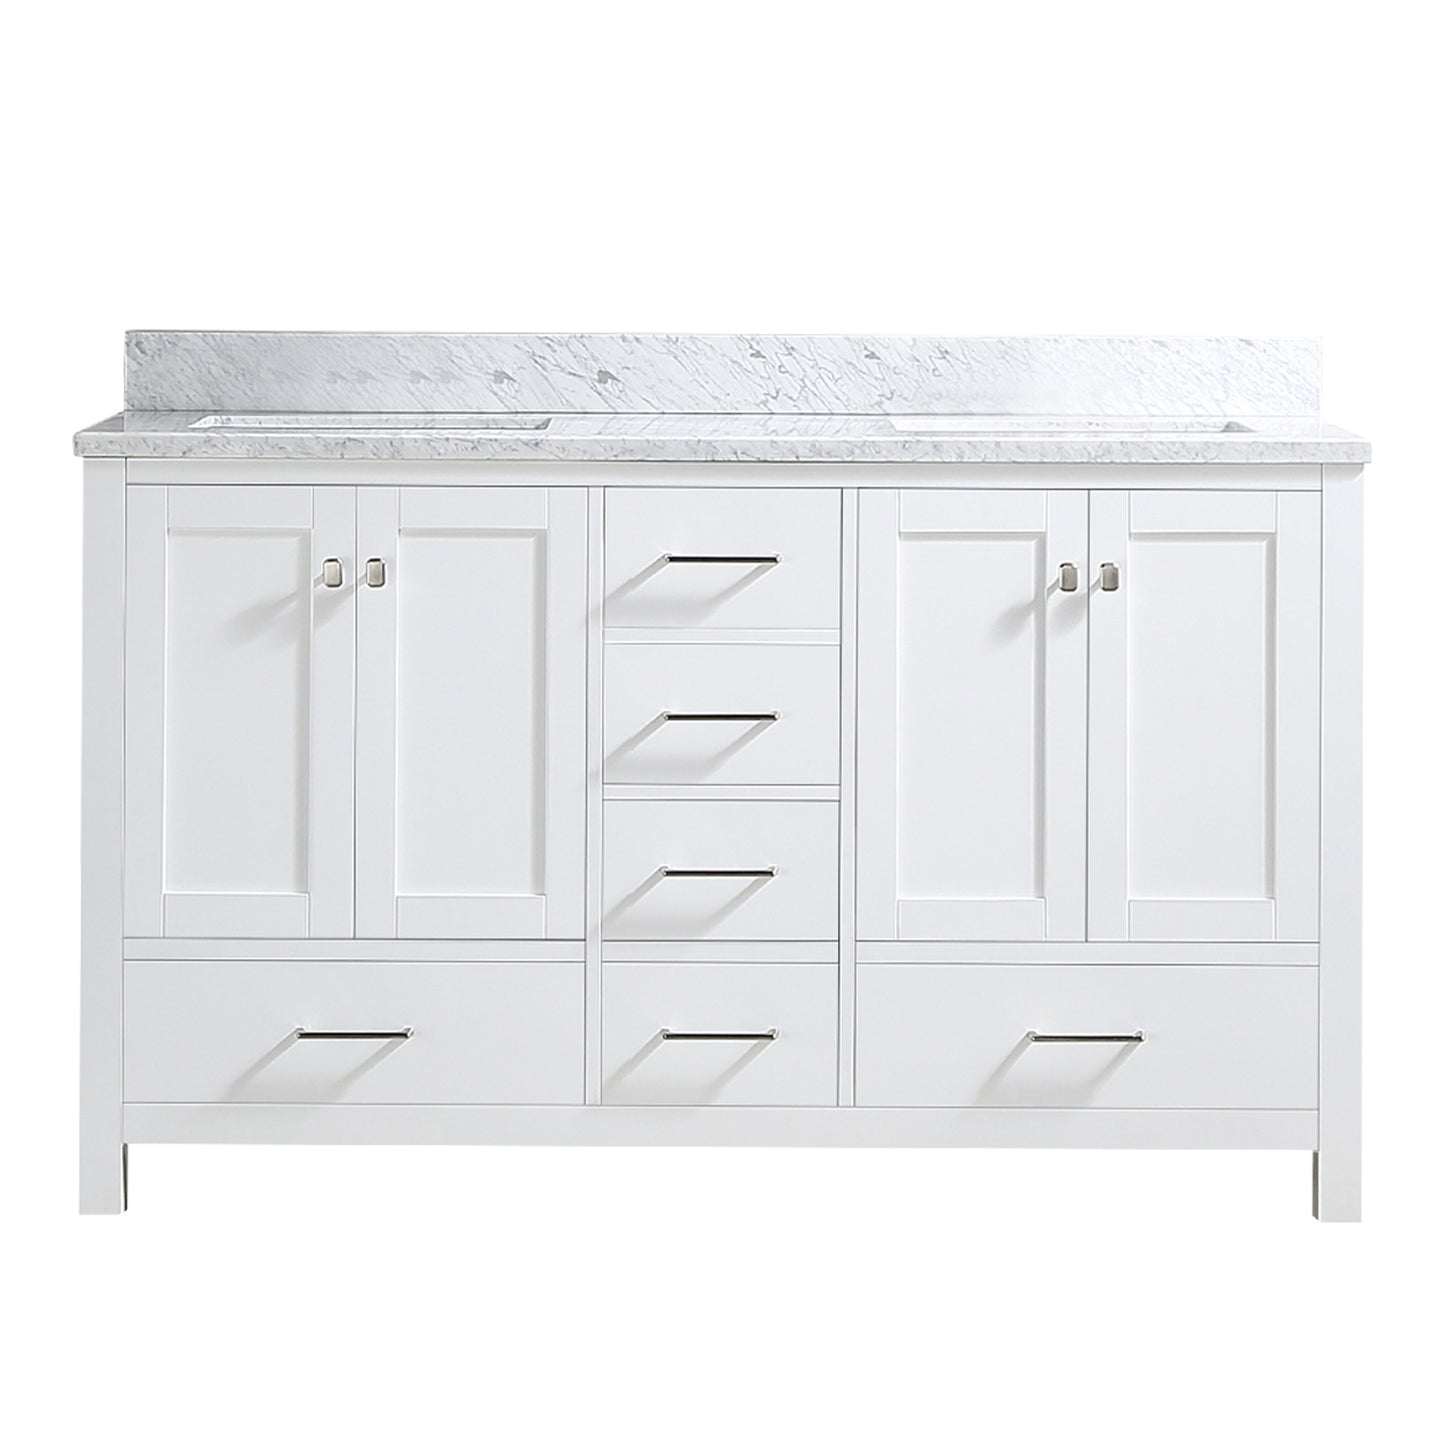 Bathroom Vanity Cabinet set 60 inches Double sink, Bathroom Storage Carrara White Marble Countertop With Back Splash